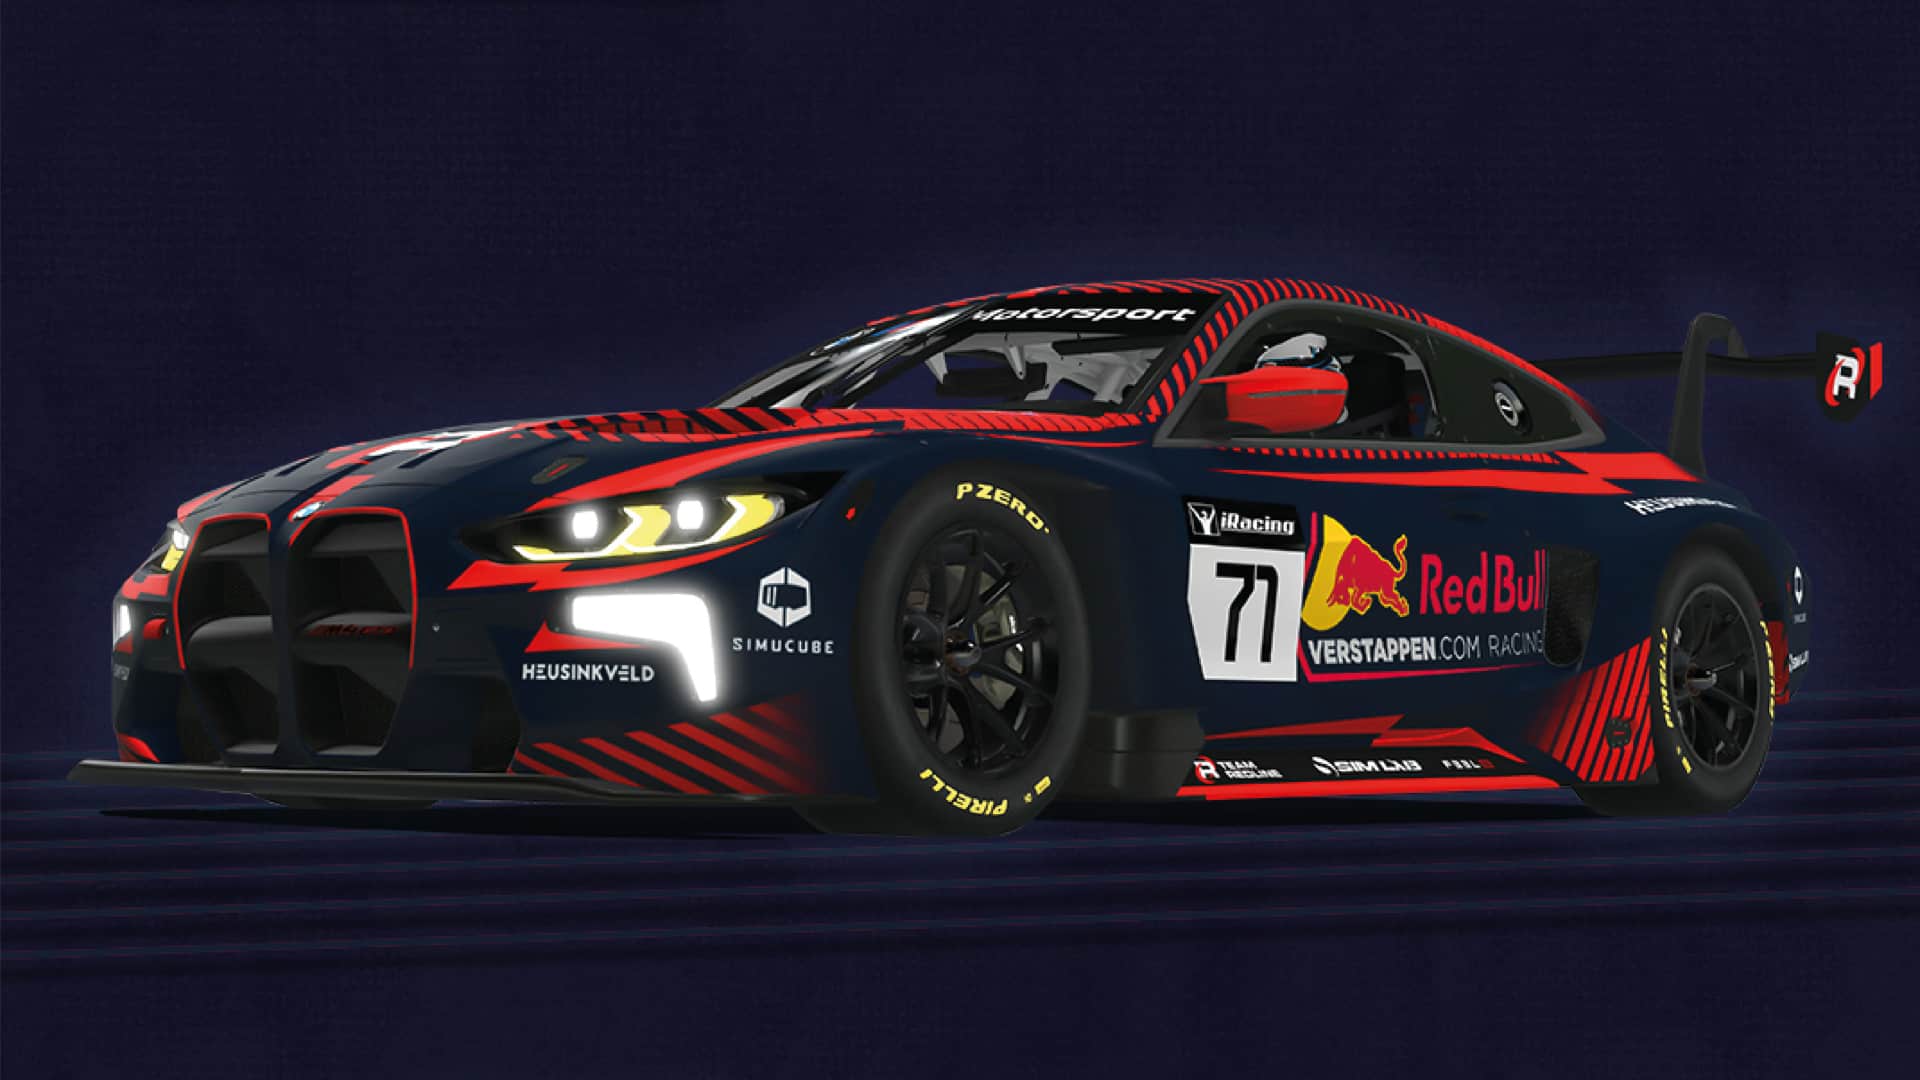 Max Verstappen unveils Verstappen.com Racing squad, includes Team Redline esports team